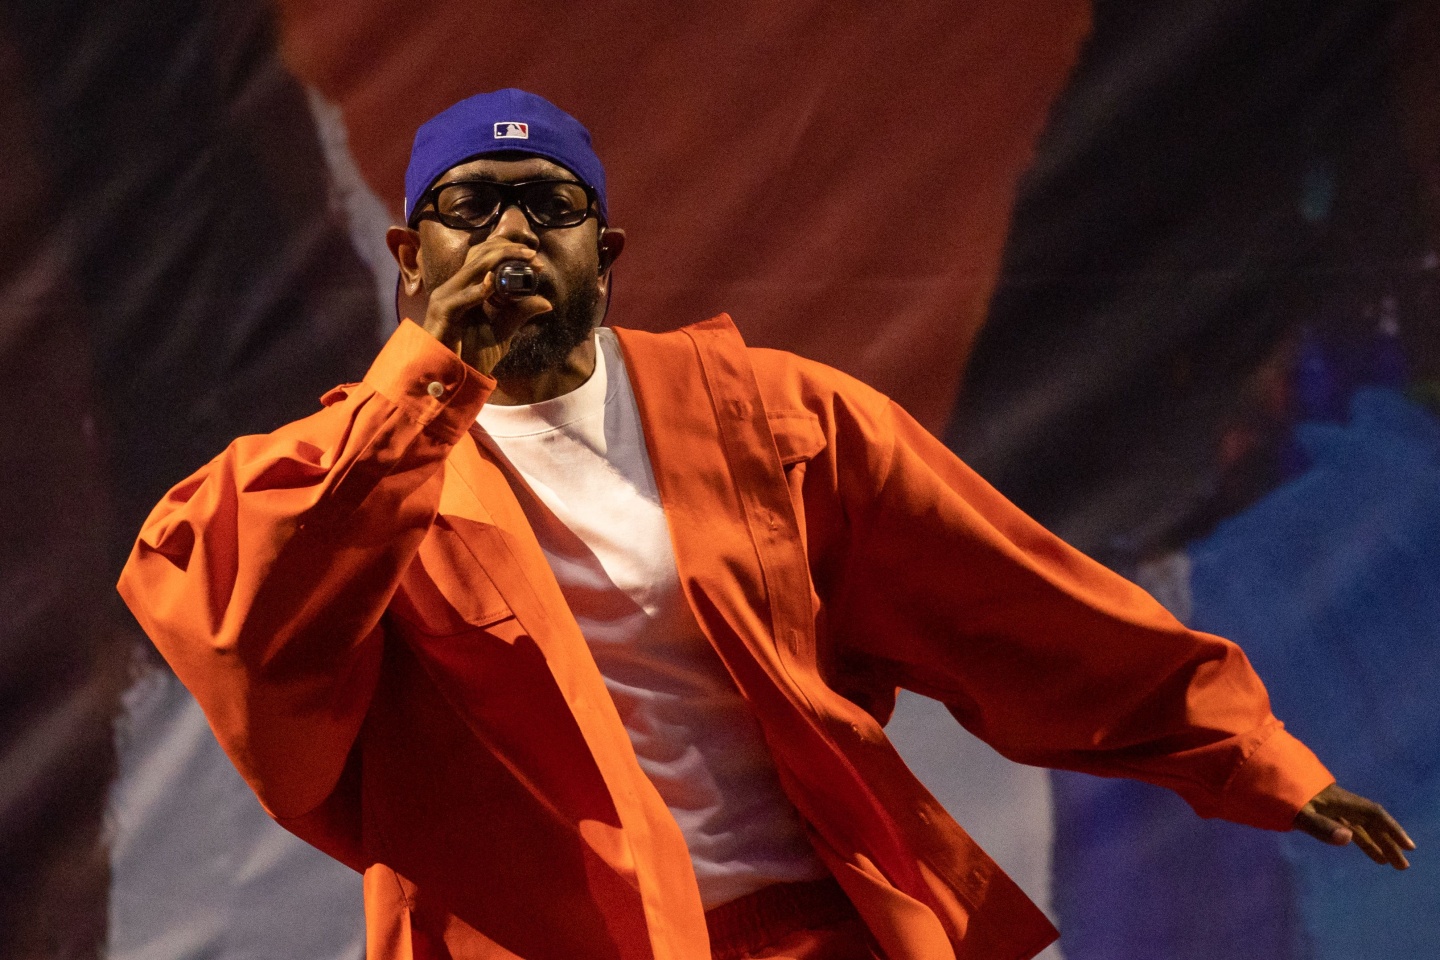 Live News: Kendrick Lamar to perform special L.A. show, David Lynch announces album, and more